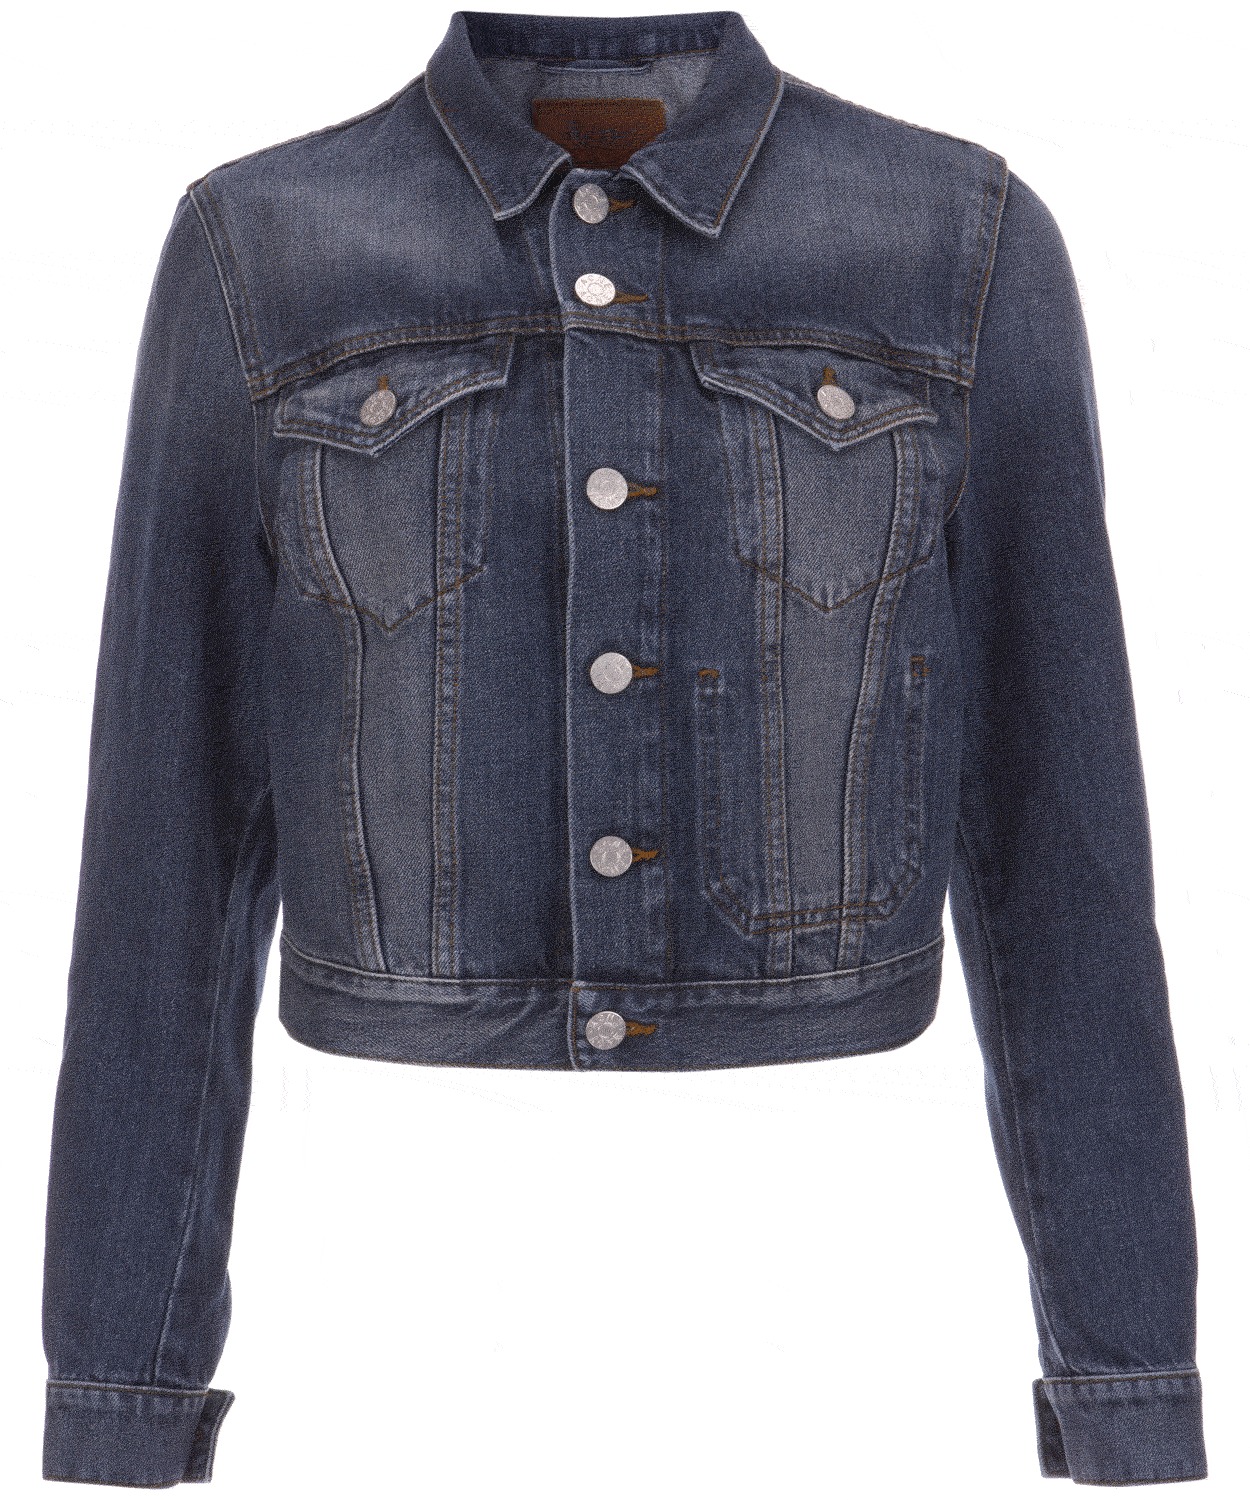 Acne Studios Indigo Tag Vintage Denim Jacket in Blue - Lyst